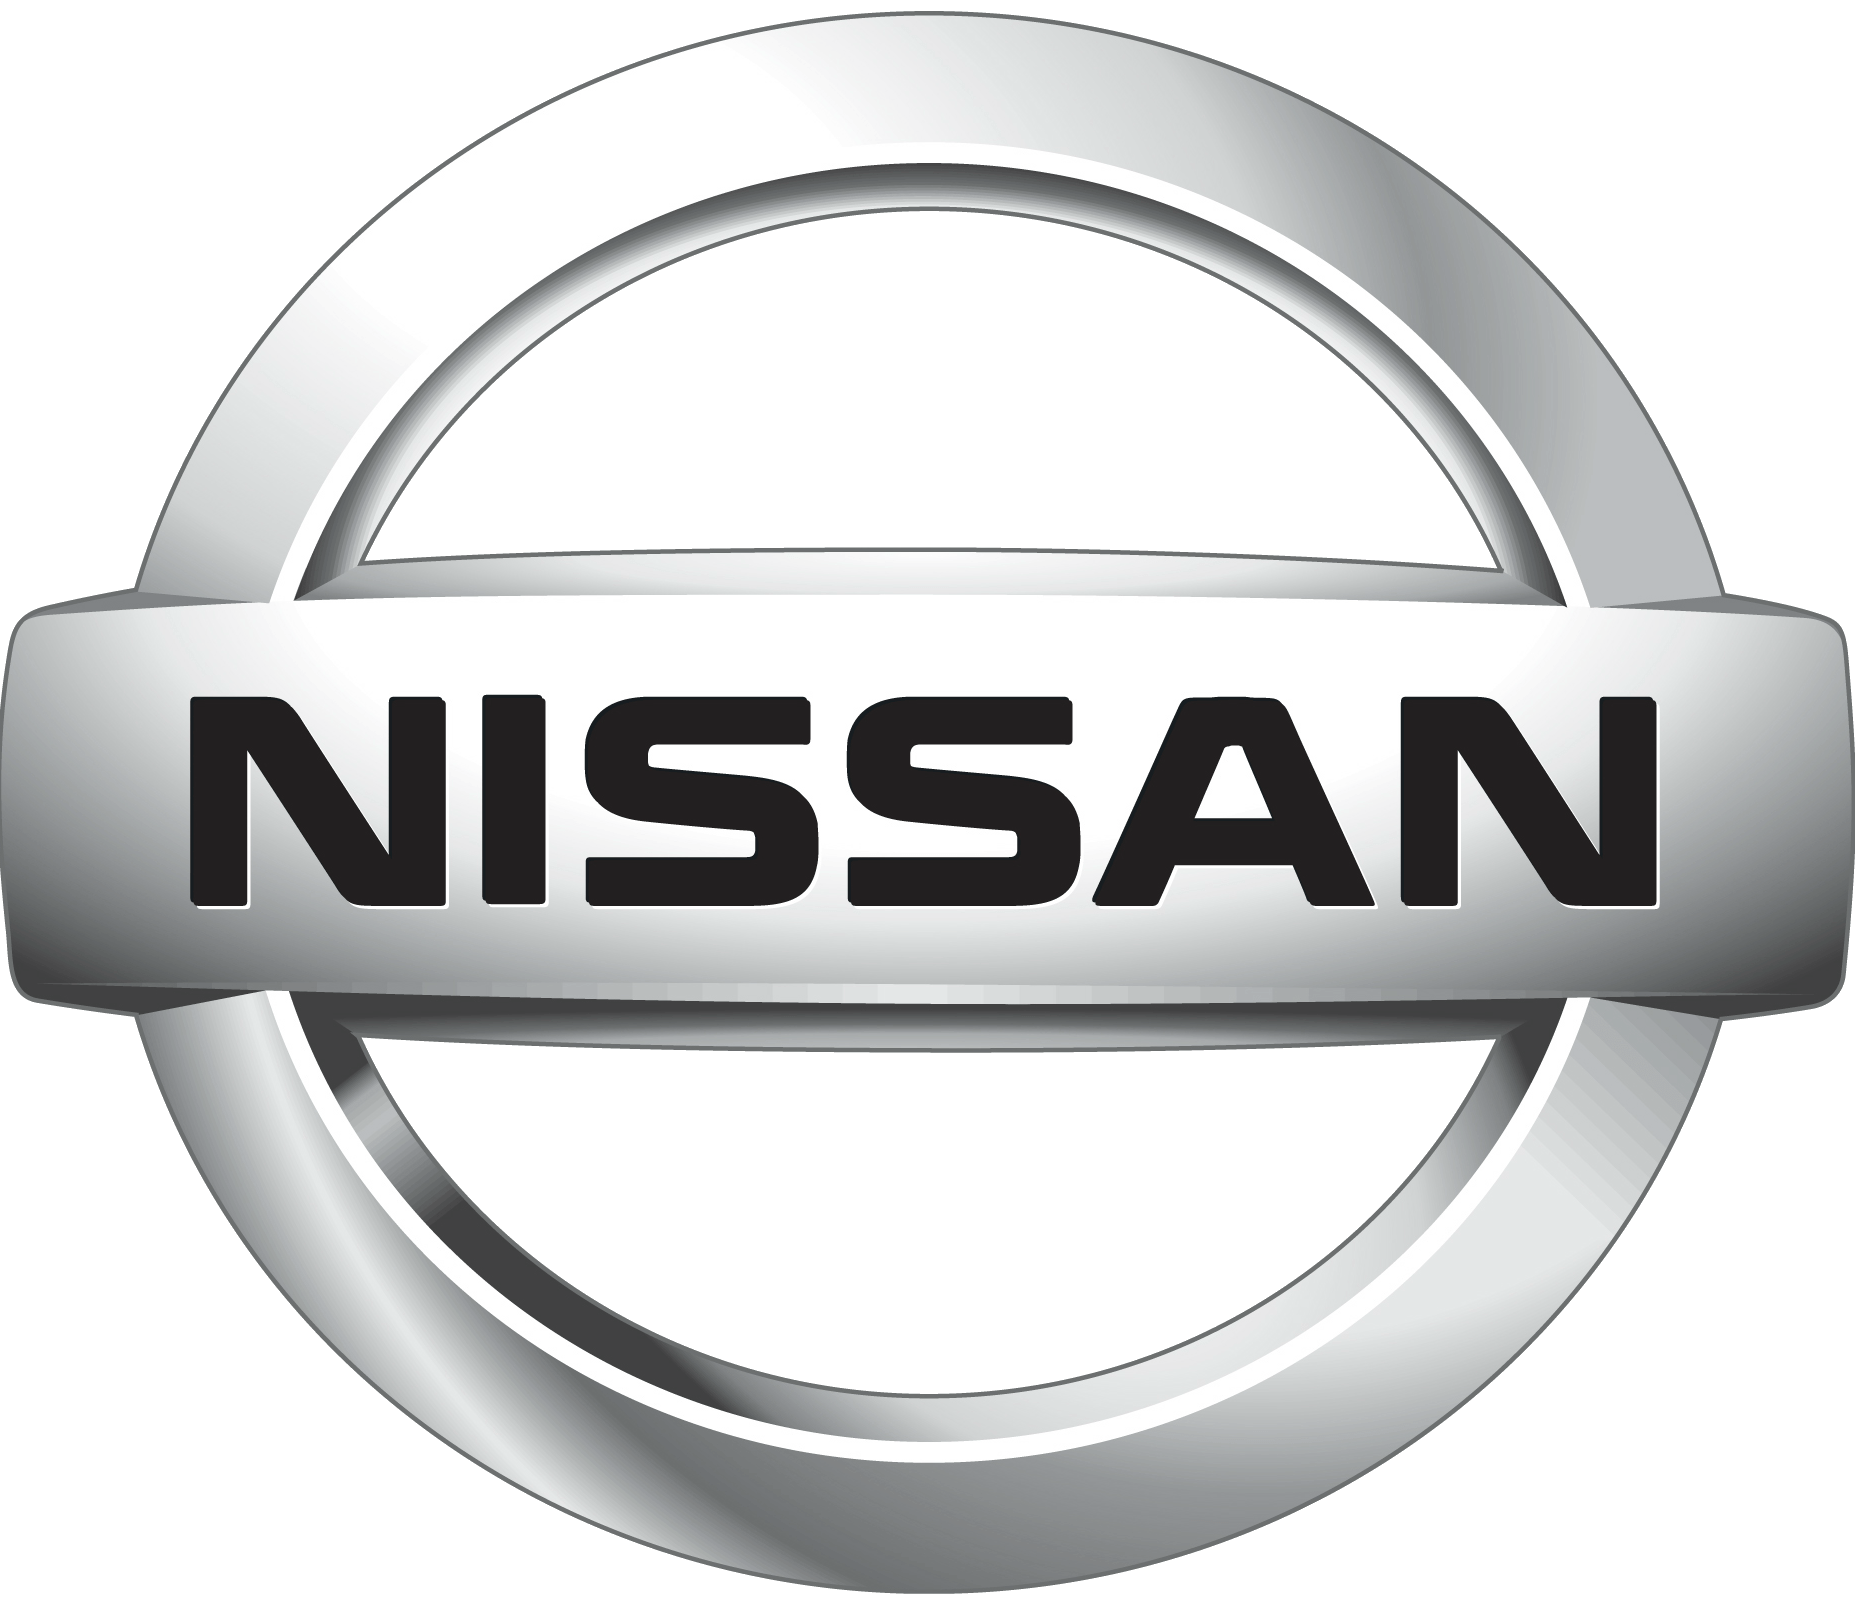 Nissan Logo - Nissan Logo, Nissan Car Symbol Meaning and History | Car Brand Names.com